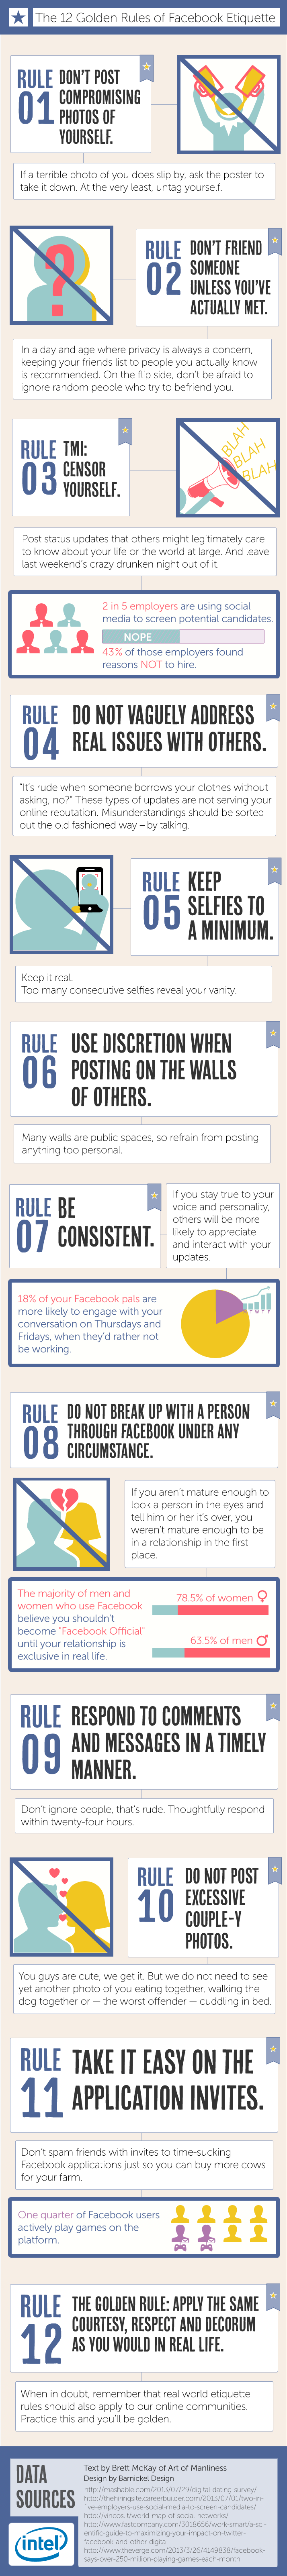 12-golden-rules-of-facebook-etiquette_